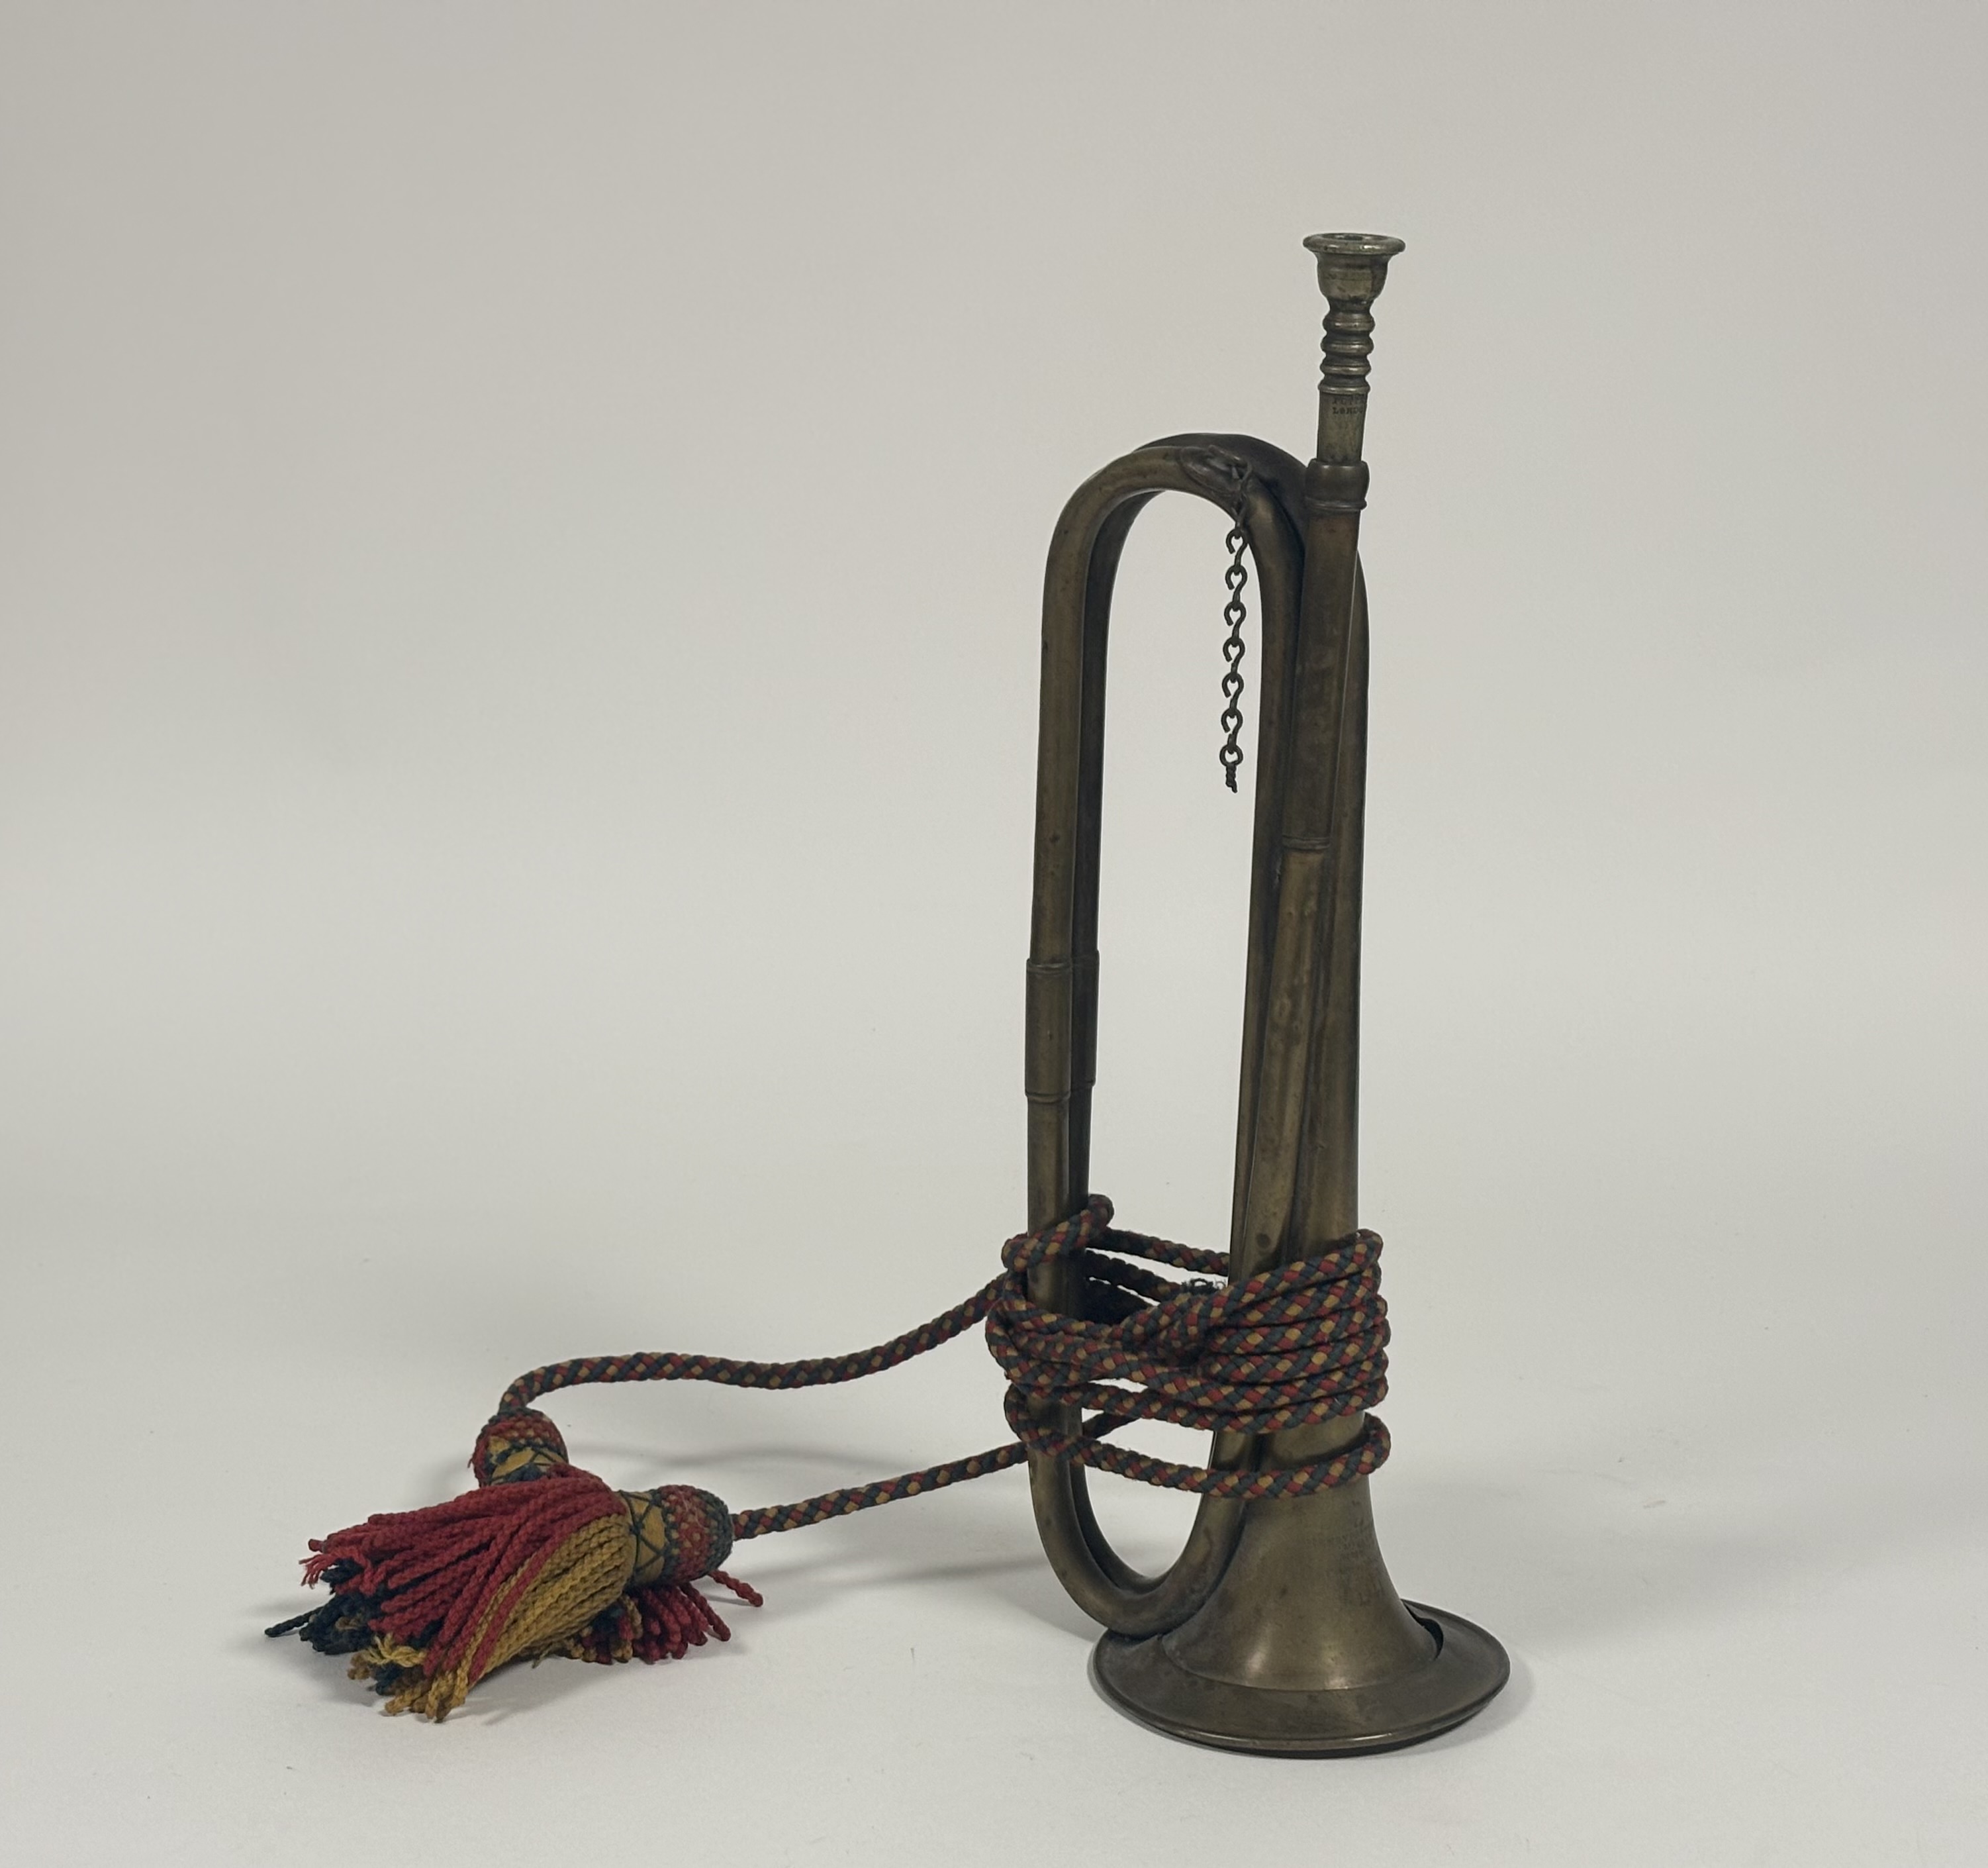 WW2 Brass Trumpet. "Henry Potter & Co Maker 36.38 West Street Charrns Rd London 1941" with